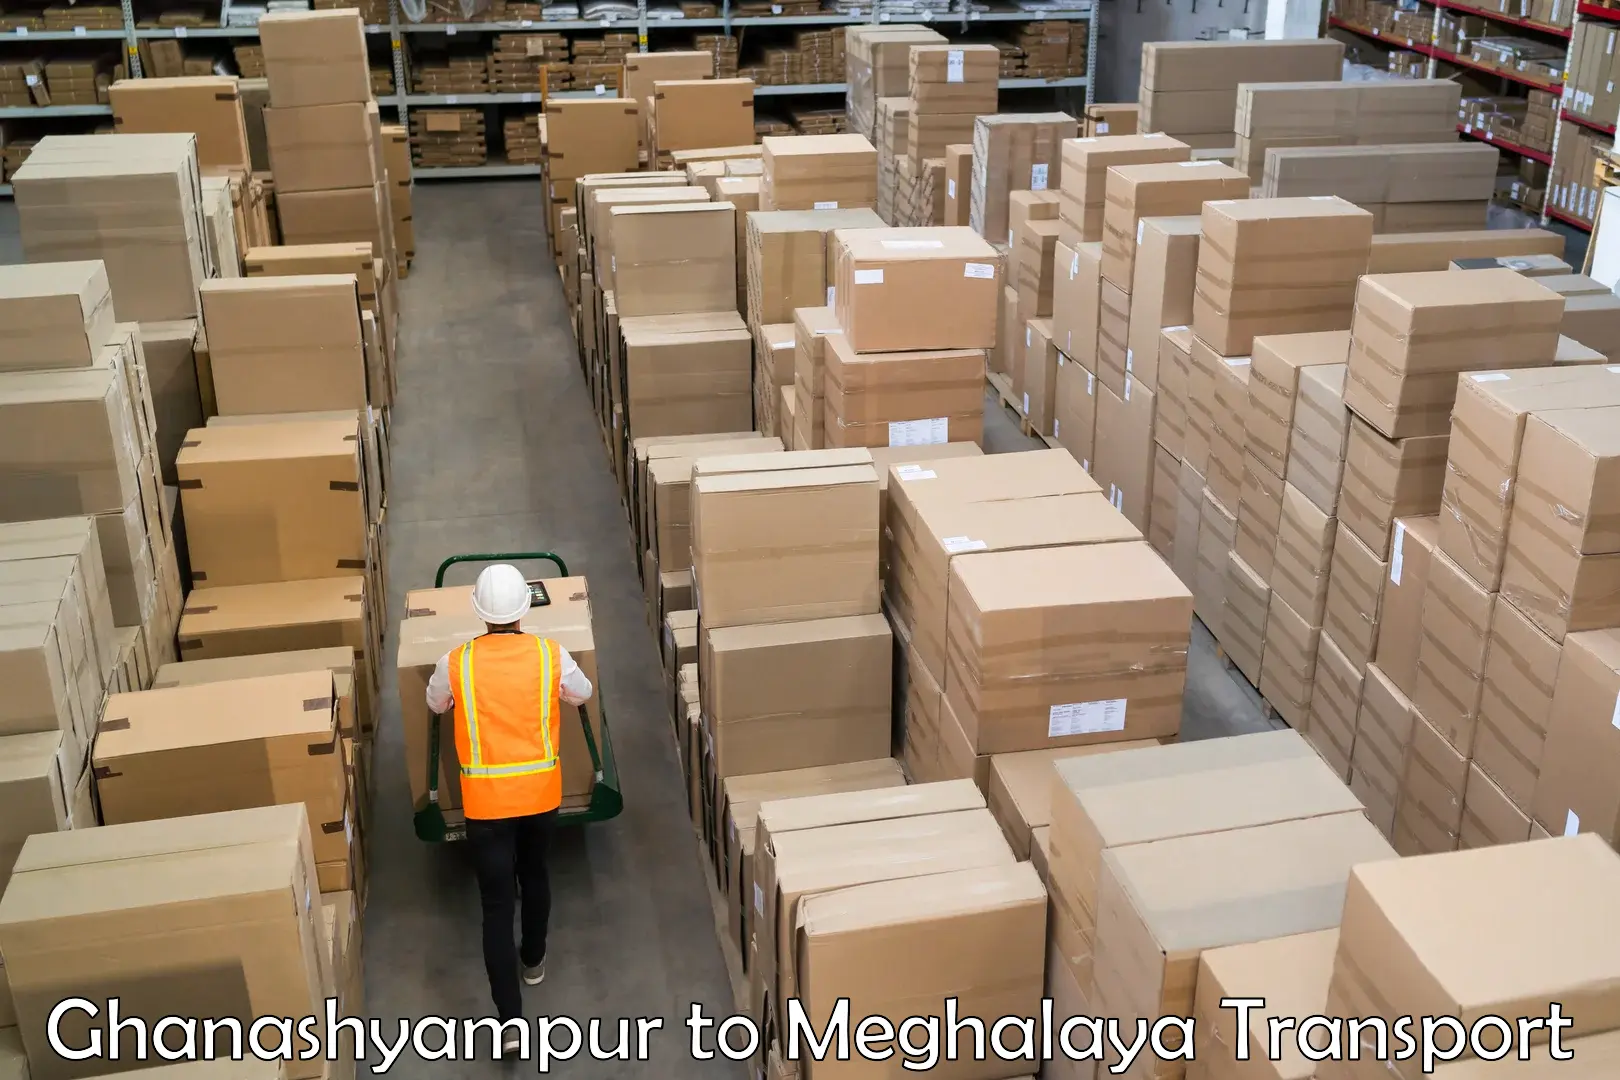 Truck transport companies in India Ghanashyampur to Meghalaya